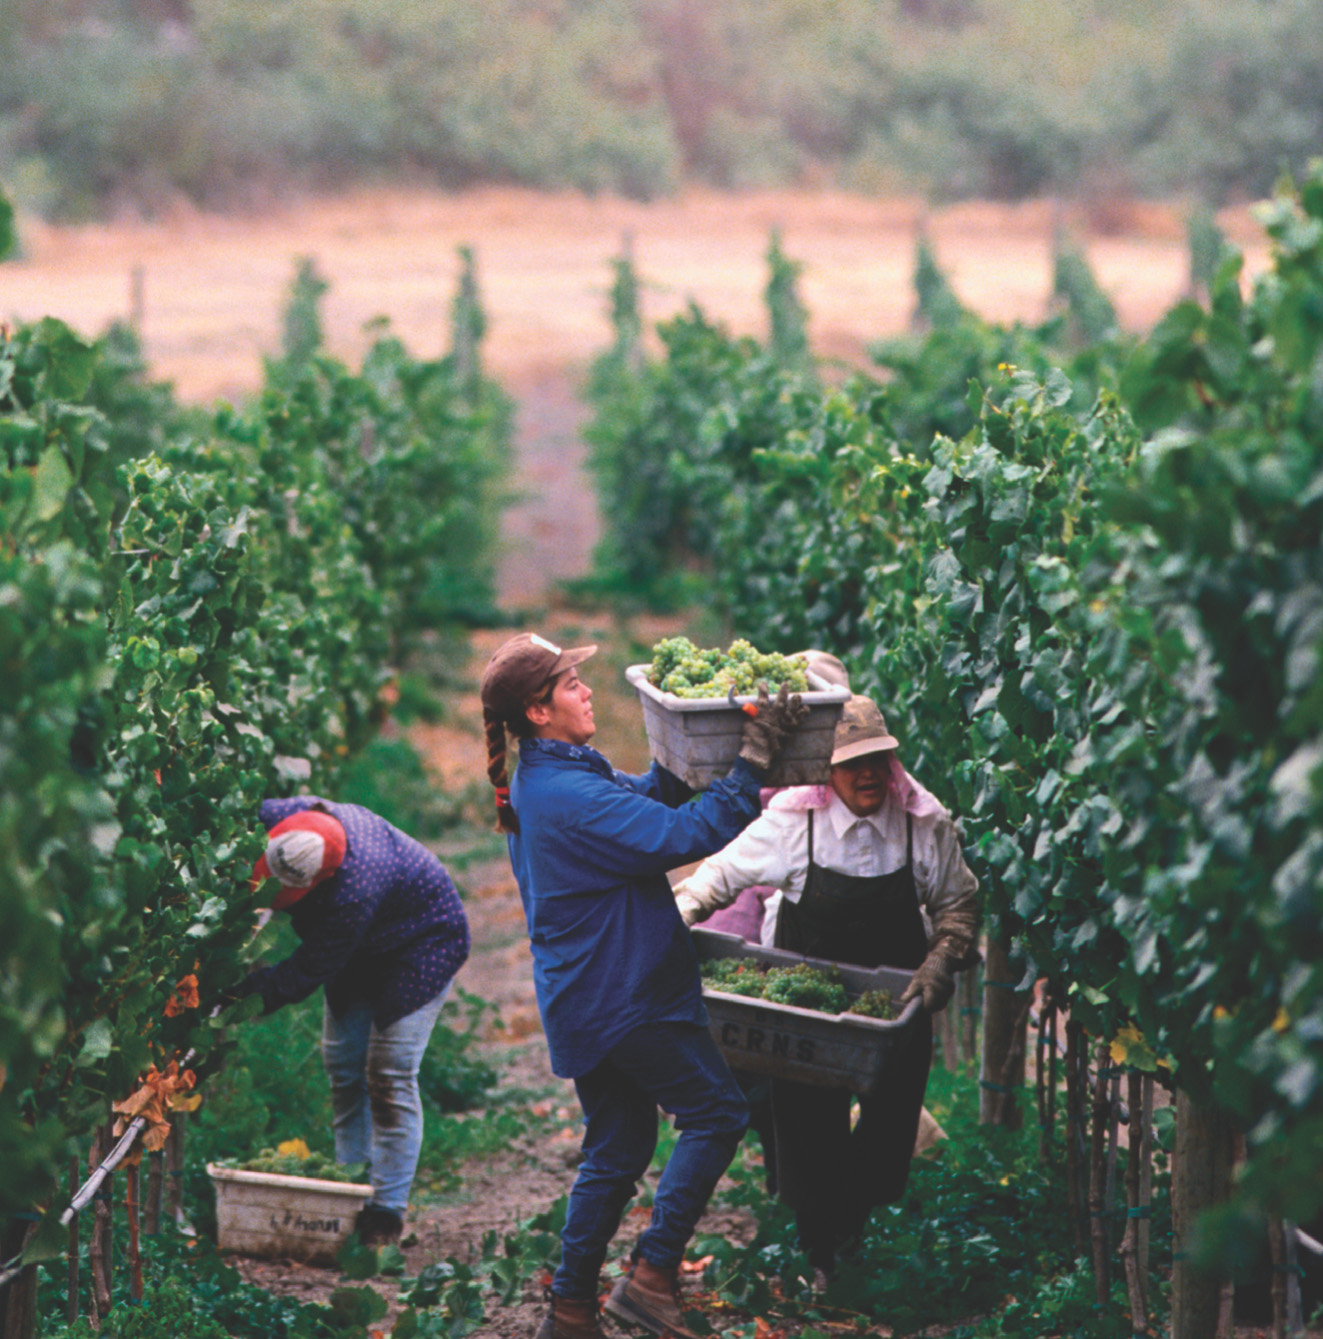 Photo: farm workers pick crops in a field.